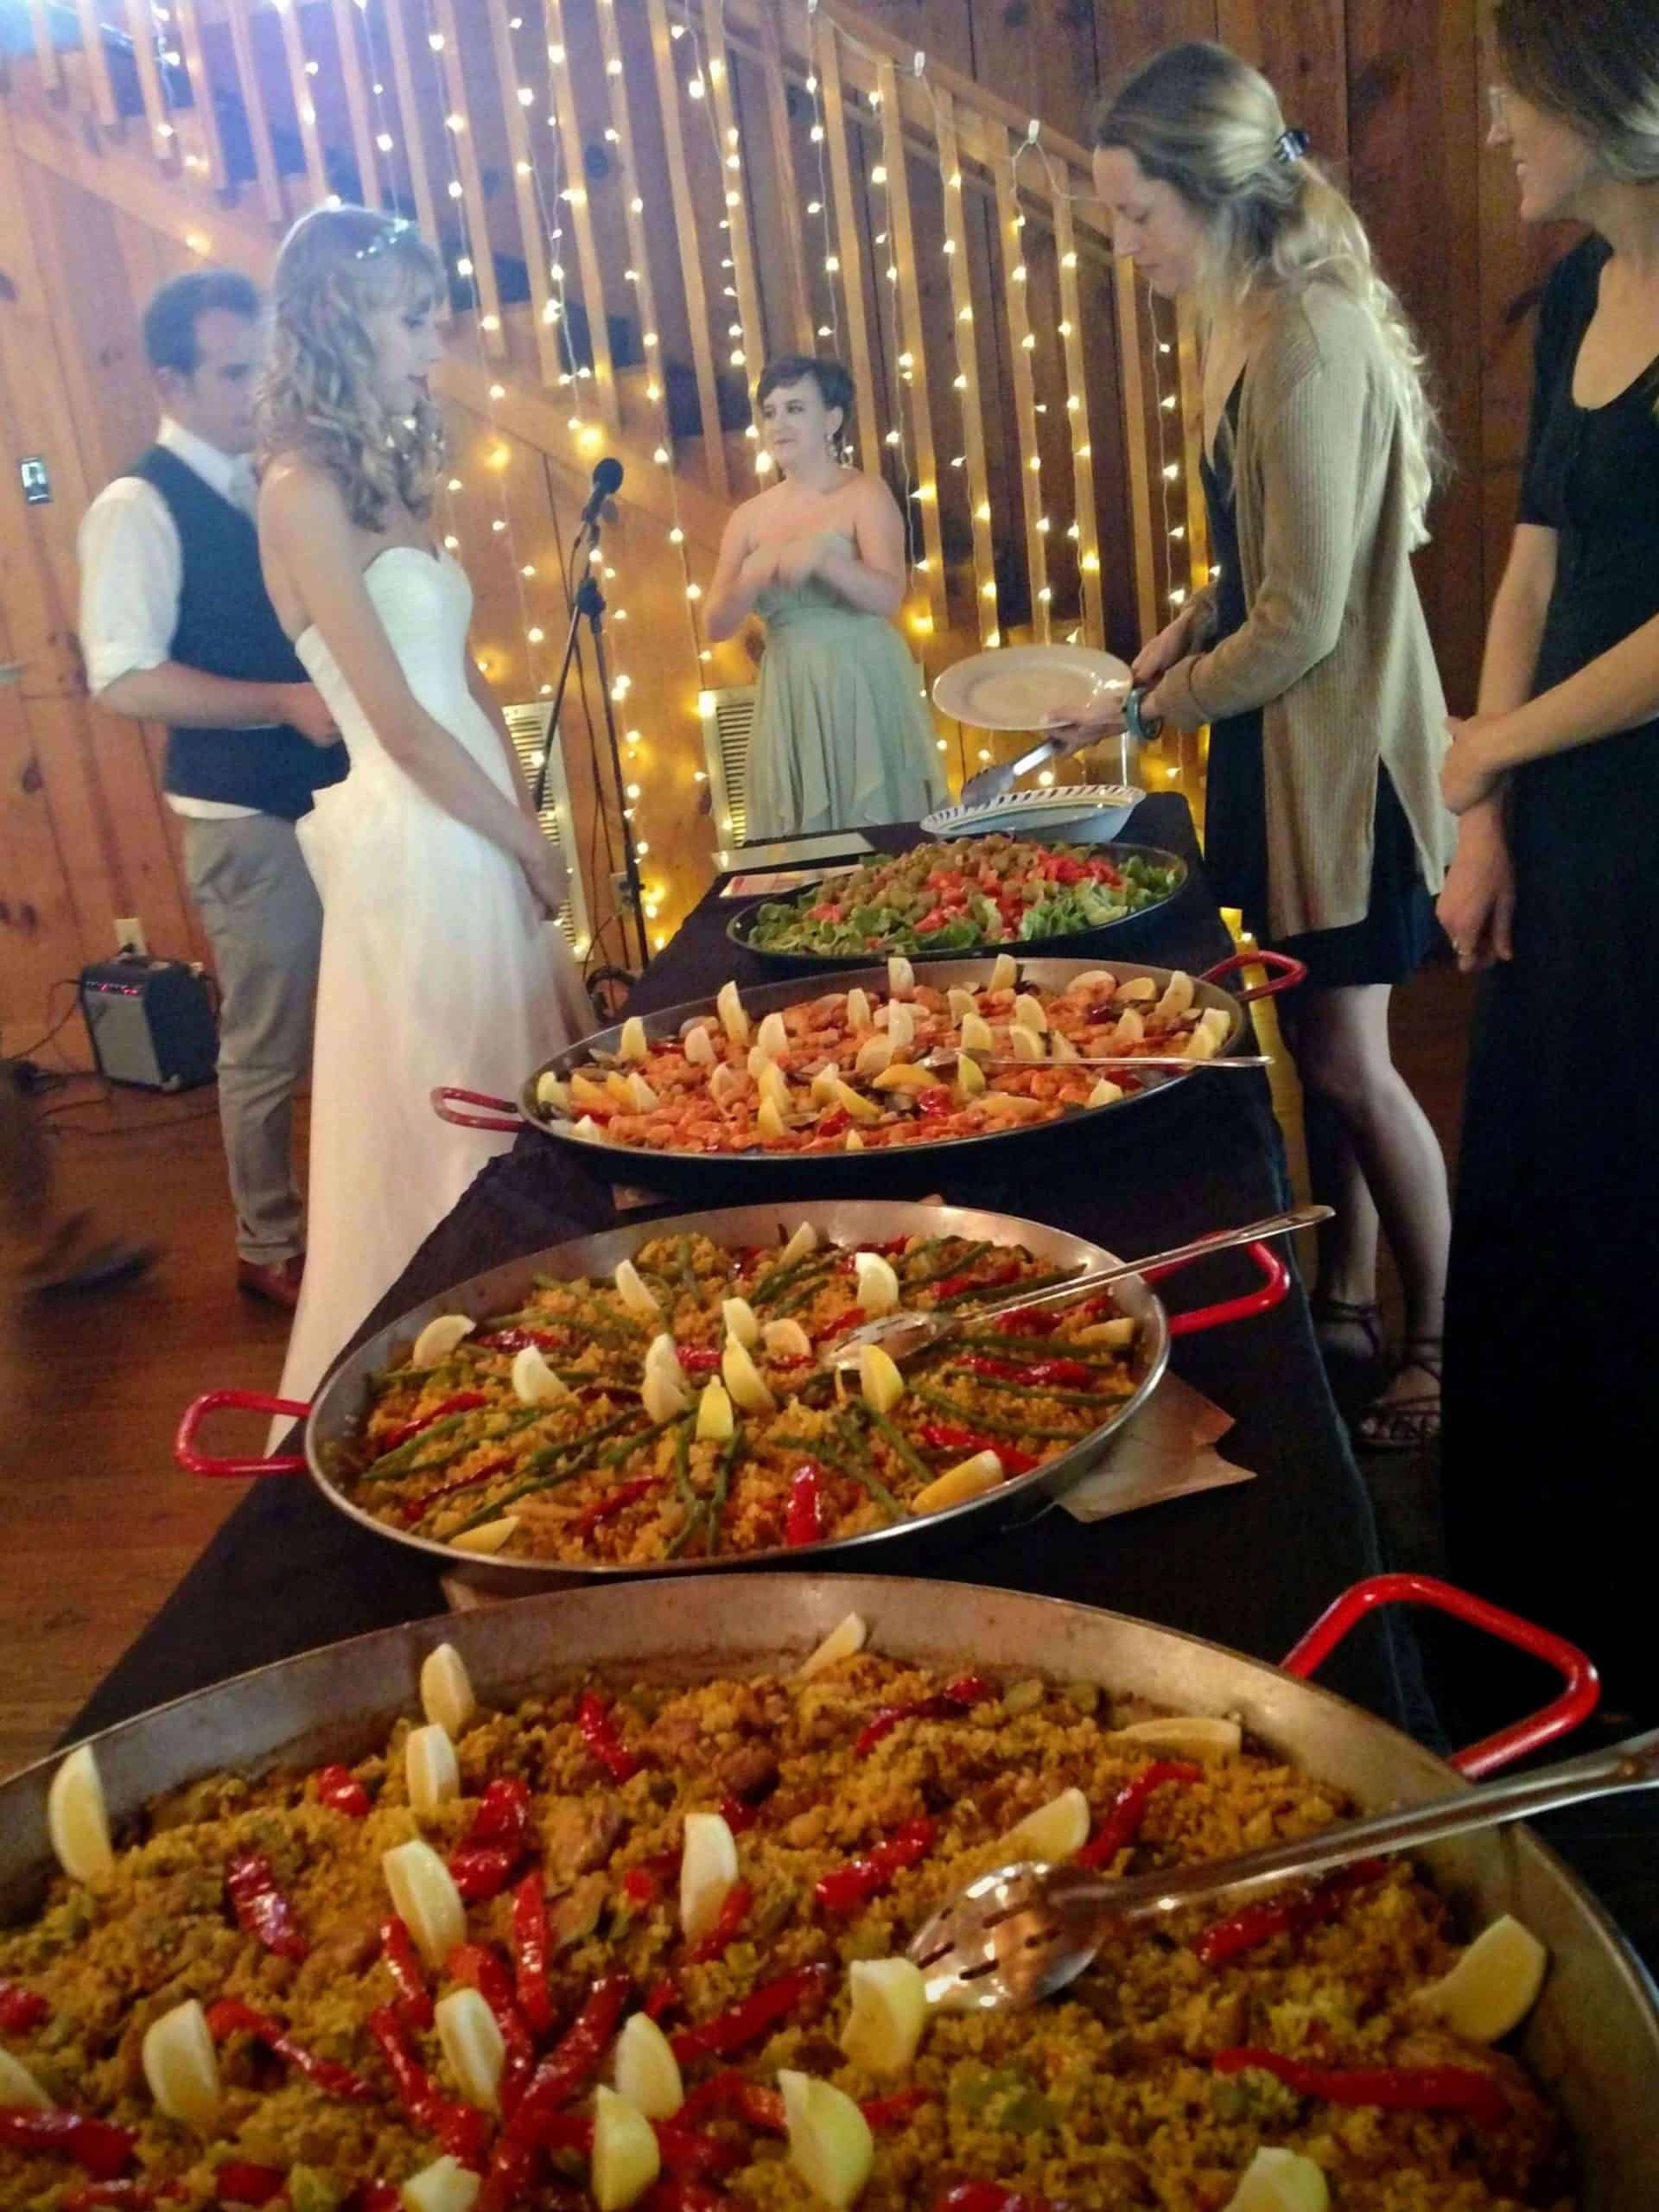 Serving paella at wedding